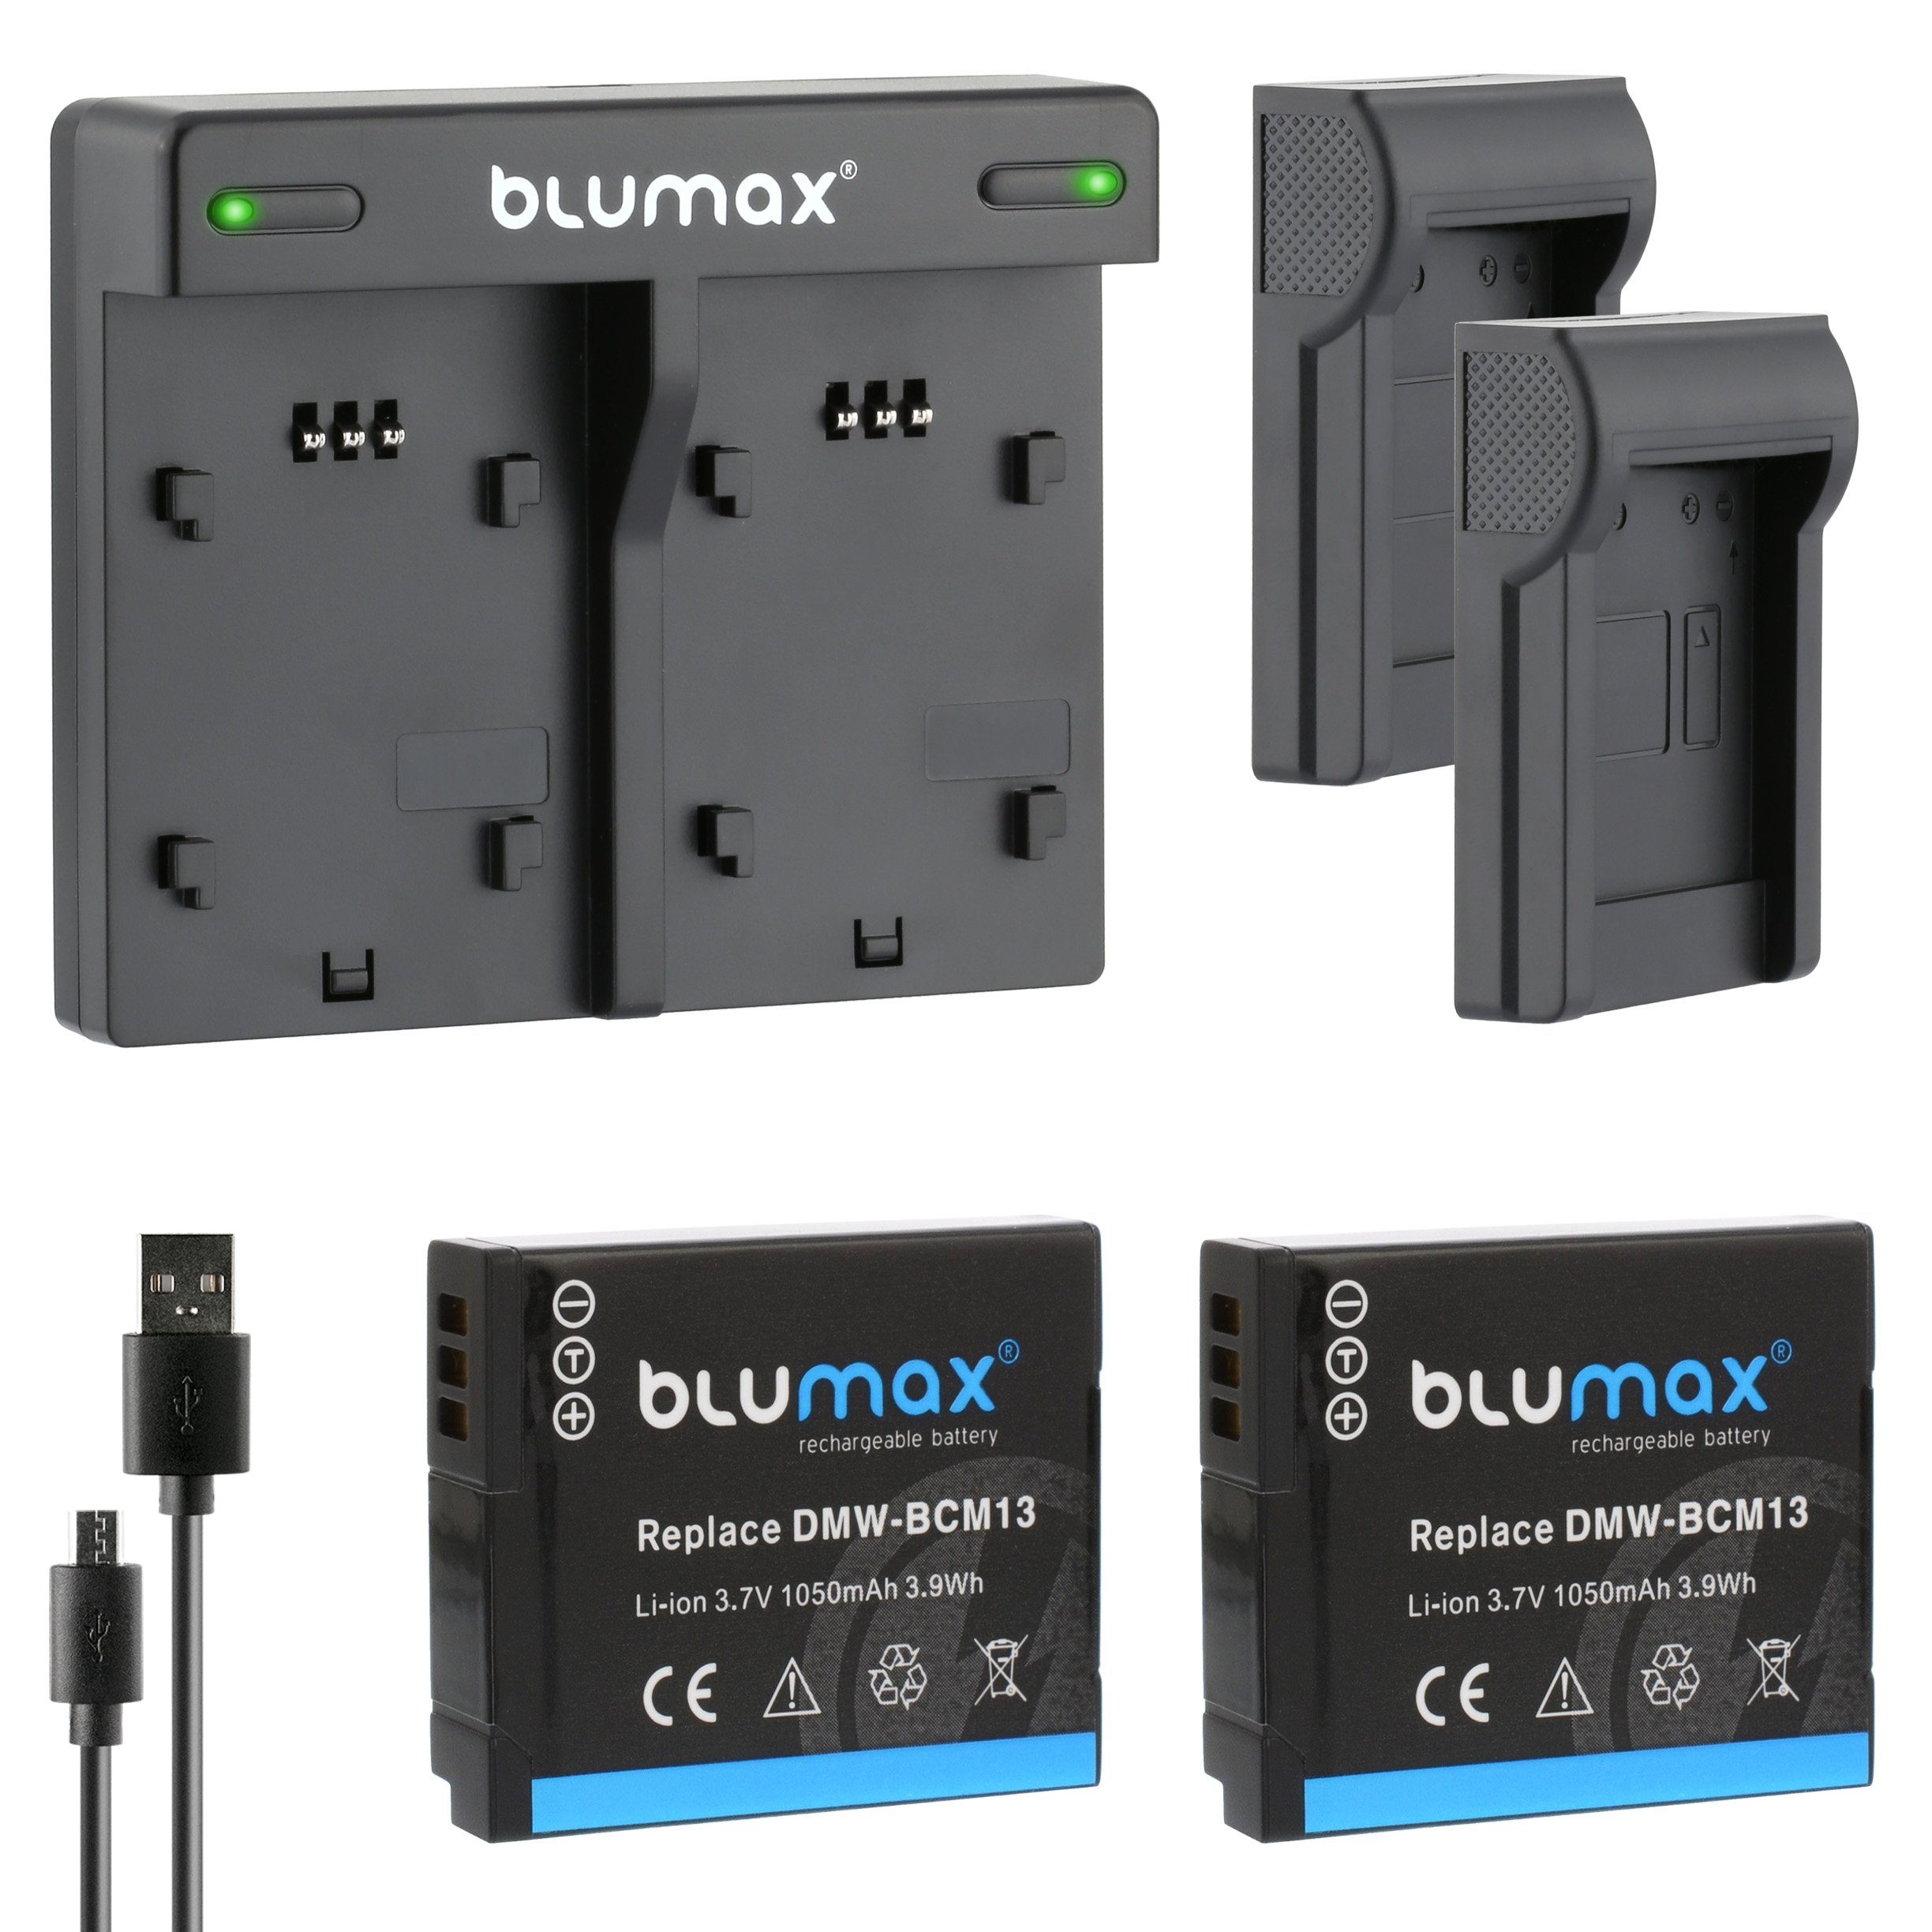 Blumax Set mit Lader für Panasonic DMW-BCM13 1050 mAh Kamera-Akku